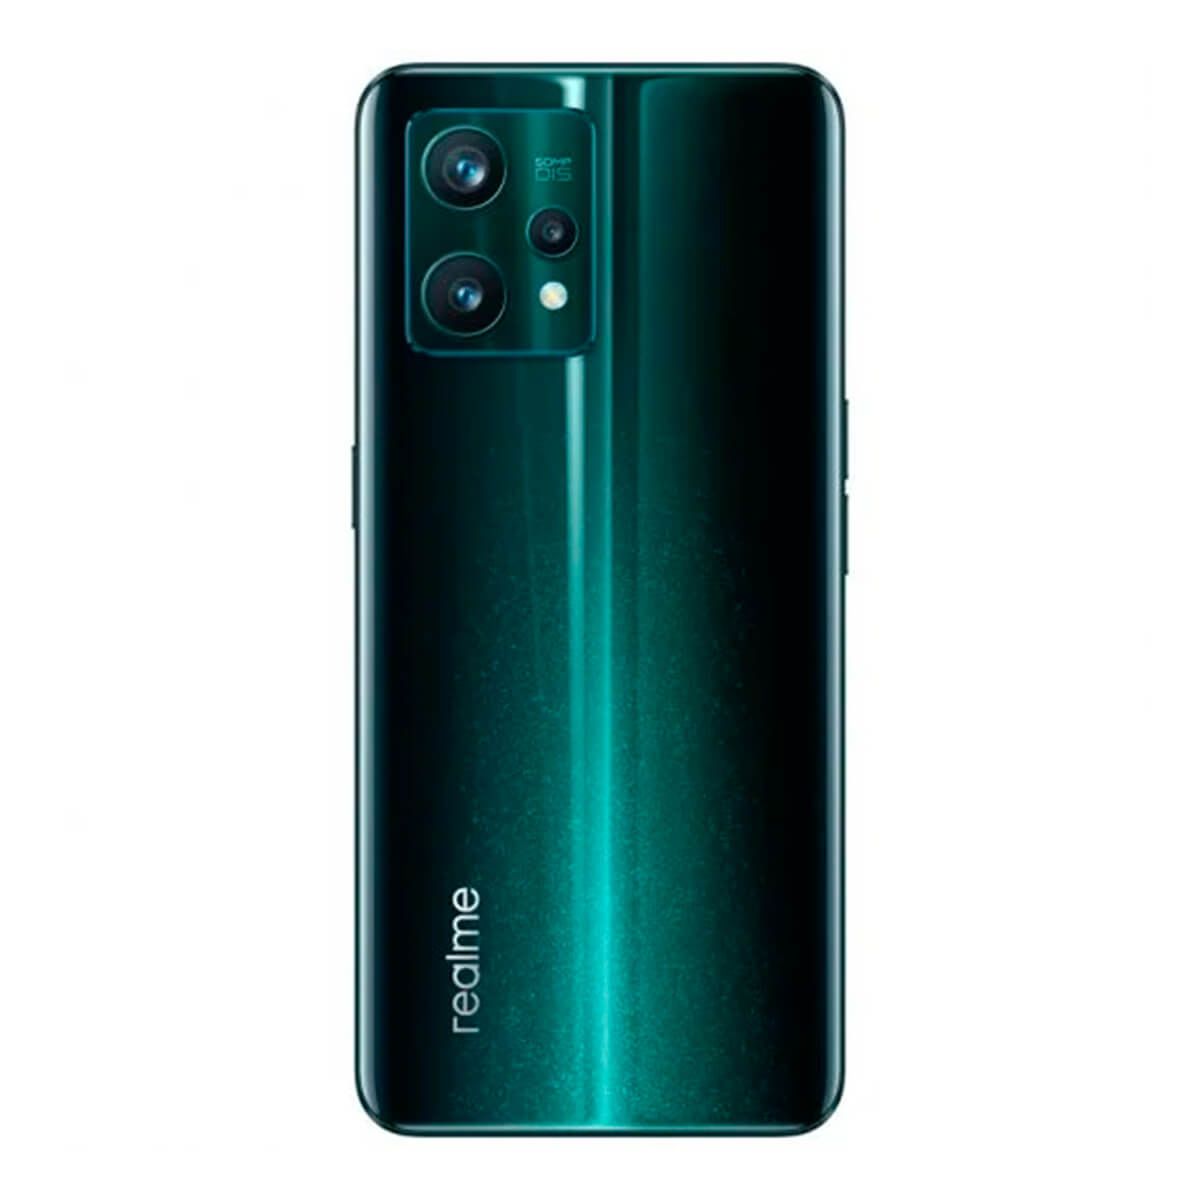 Realme 9 Pro+ 5G 6GB/128GB Green (Aurora Green) Dual SIM RMX3393